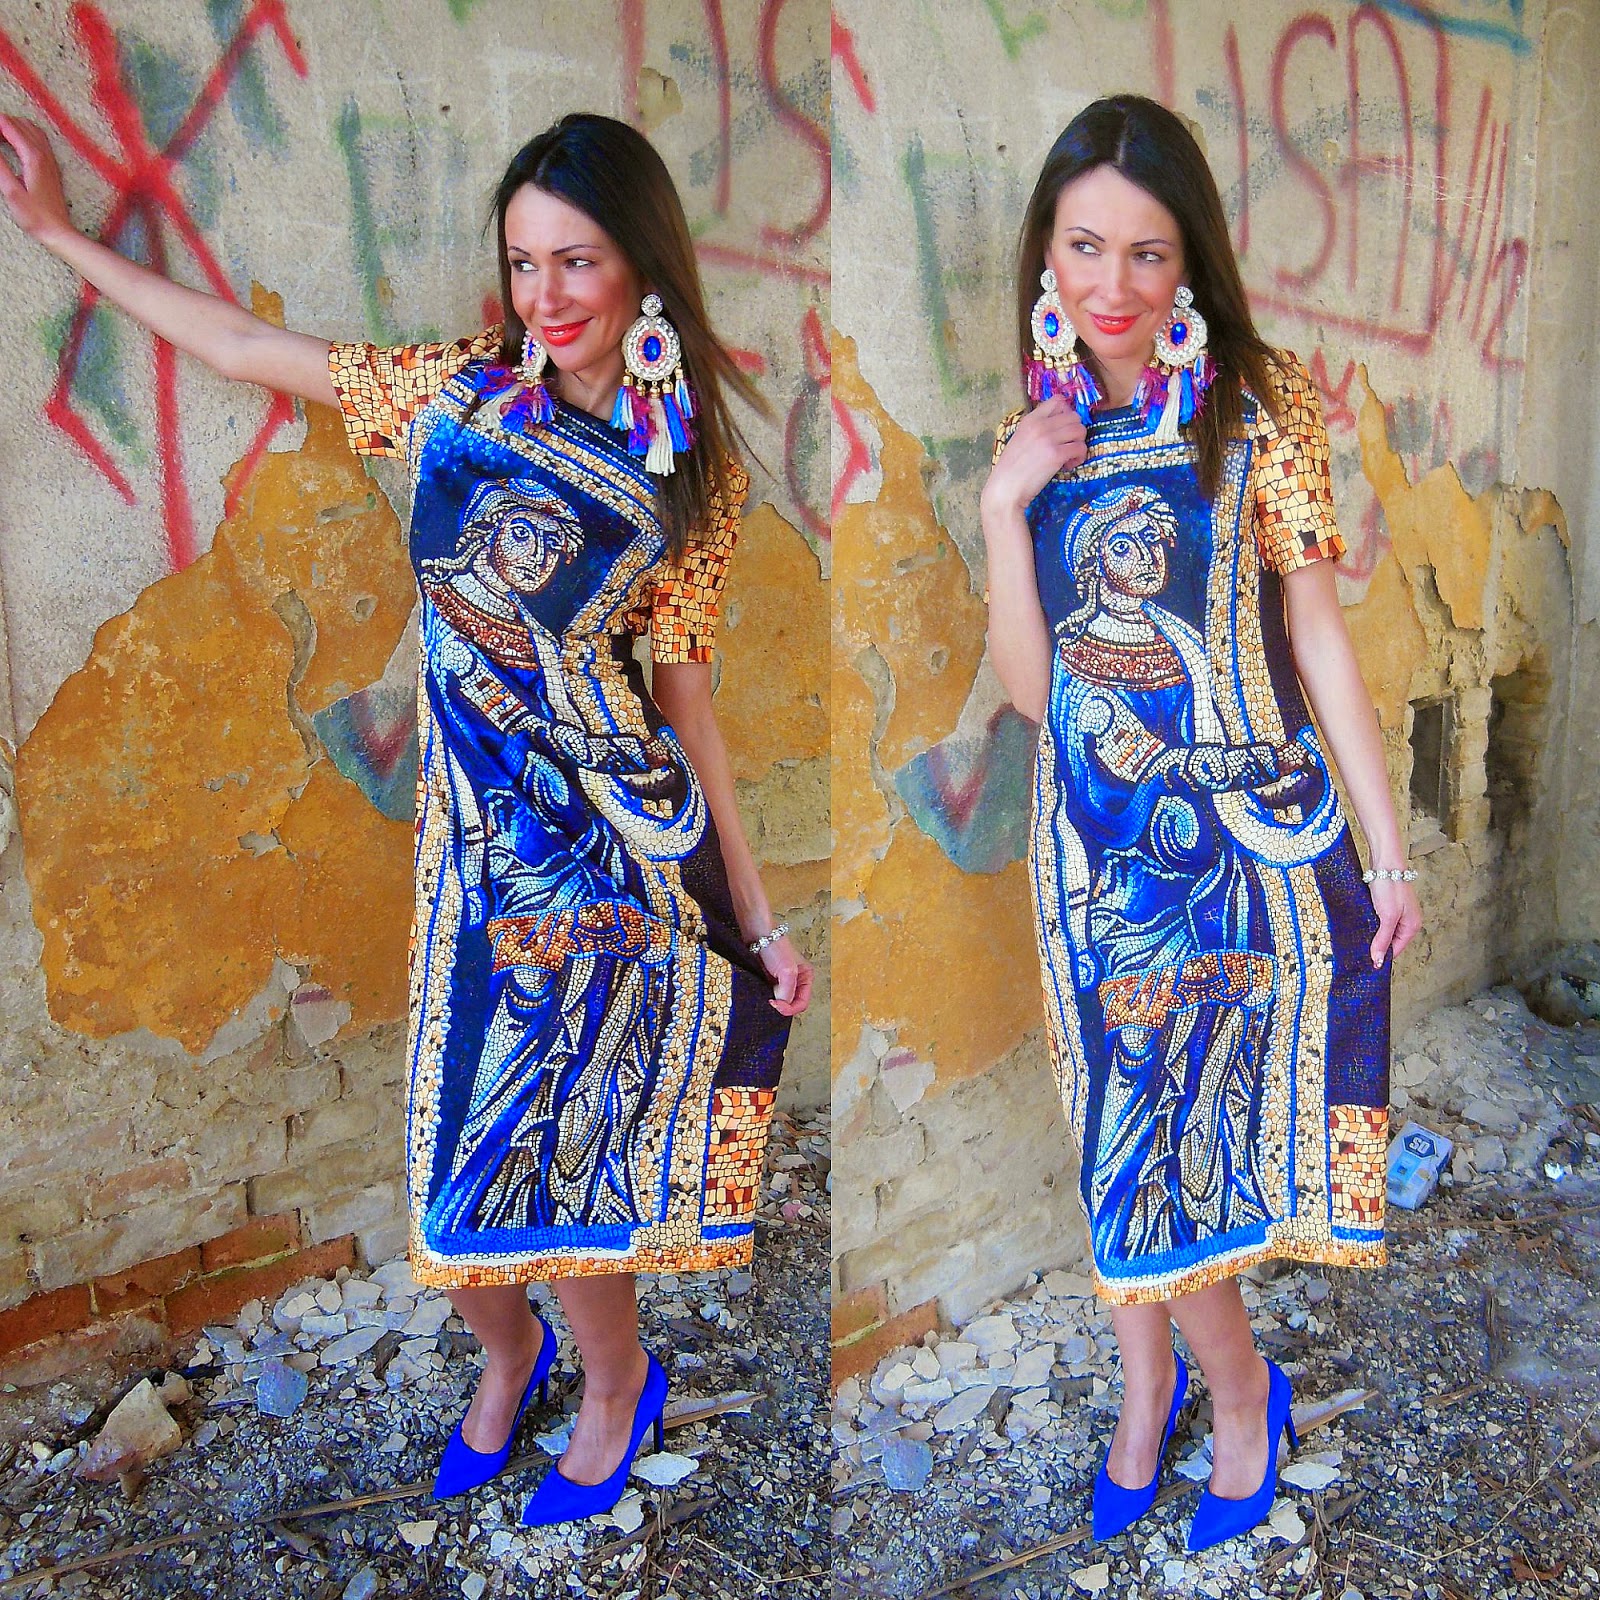 Maja Paripovic blog: Mosaic-print hourglass dress by D&G